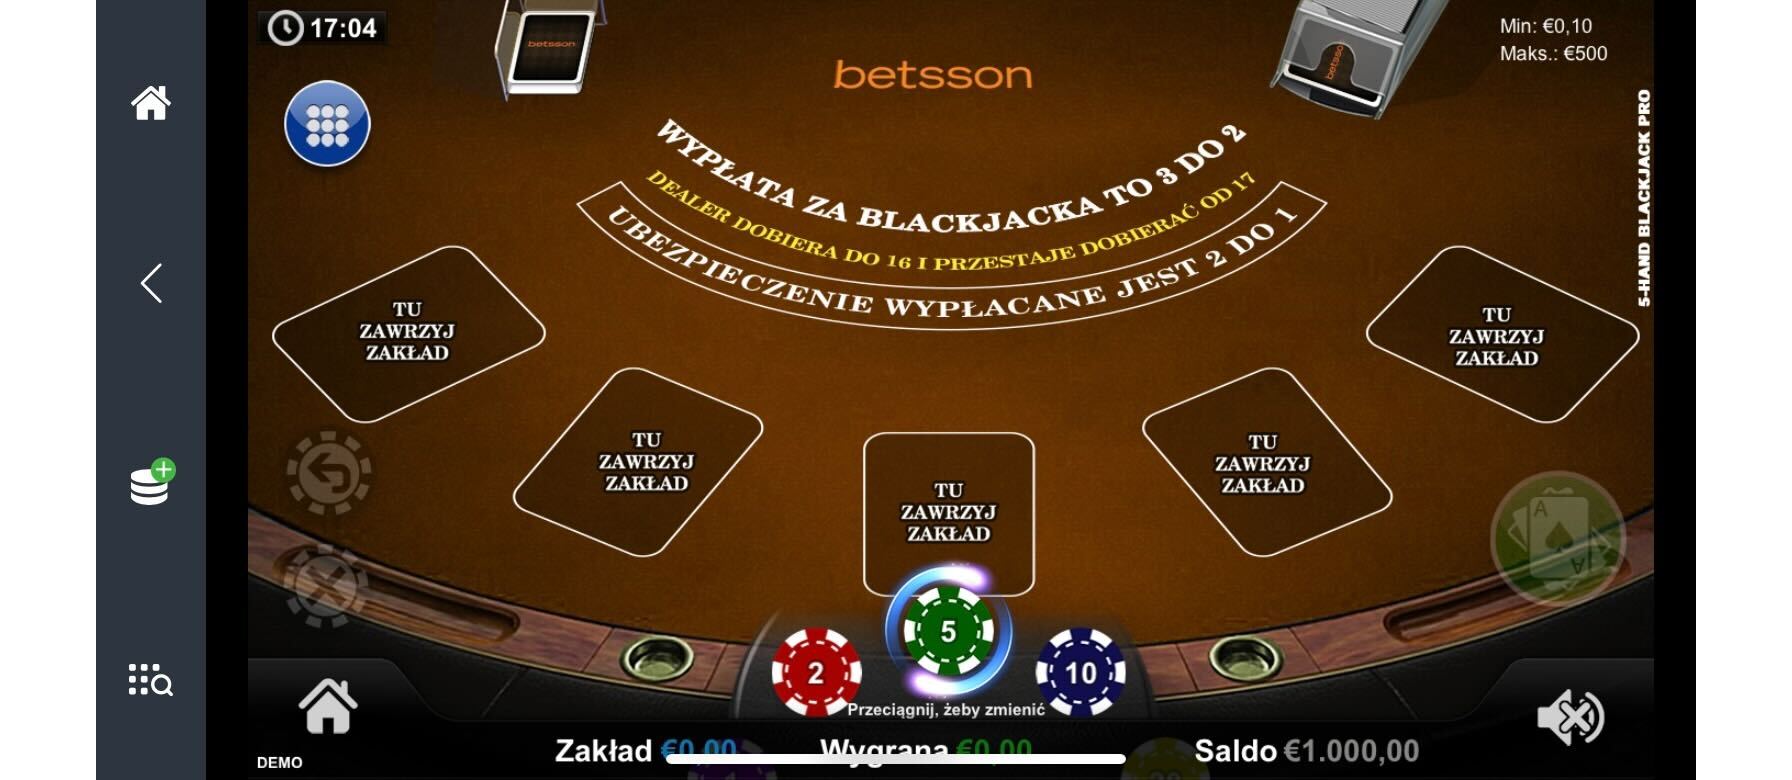 Betsson Casino Mobile Review